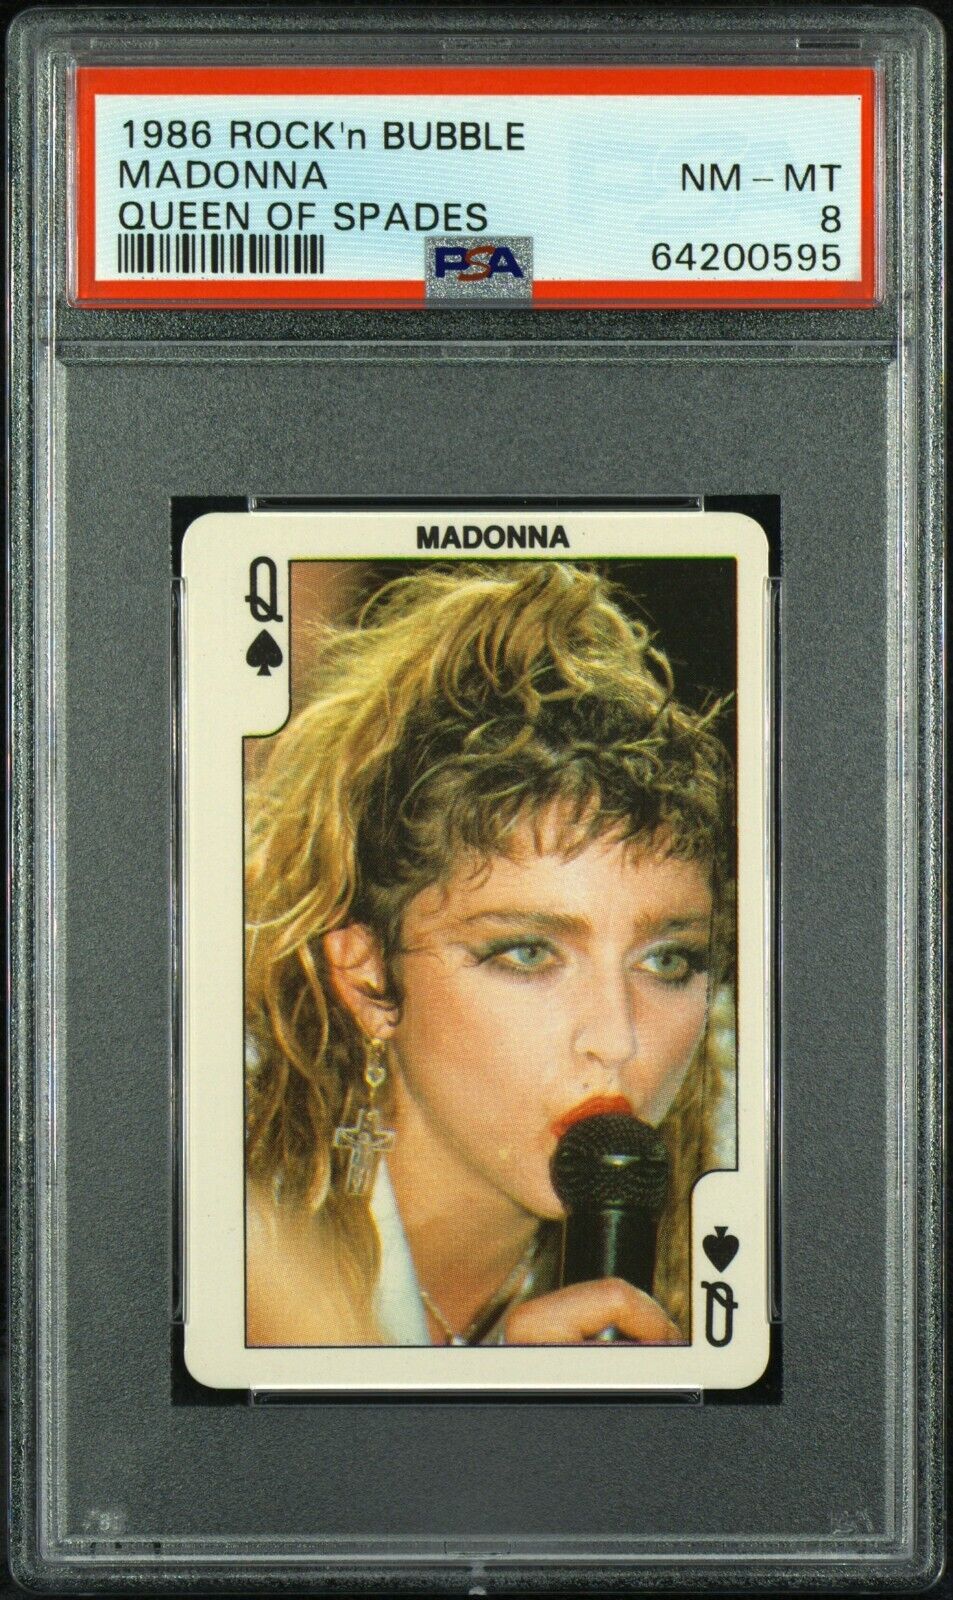 1986 ROCK'N BUBBLE MADONNA QUEEN OF SPADES PSA 8 NM-MT Card LOW POP